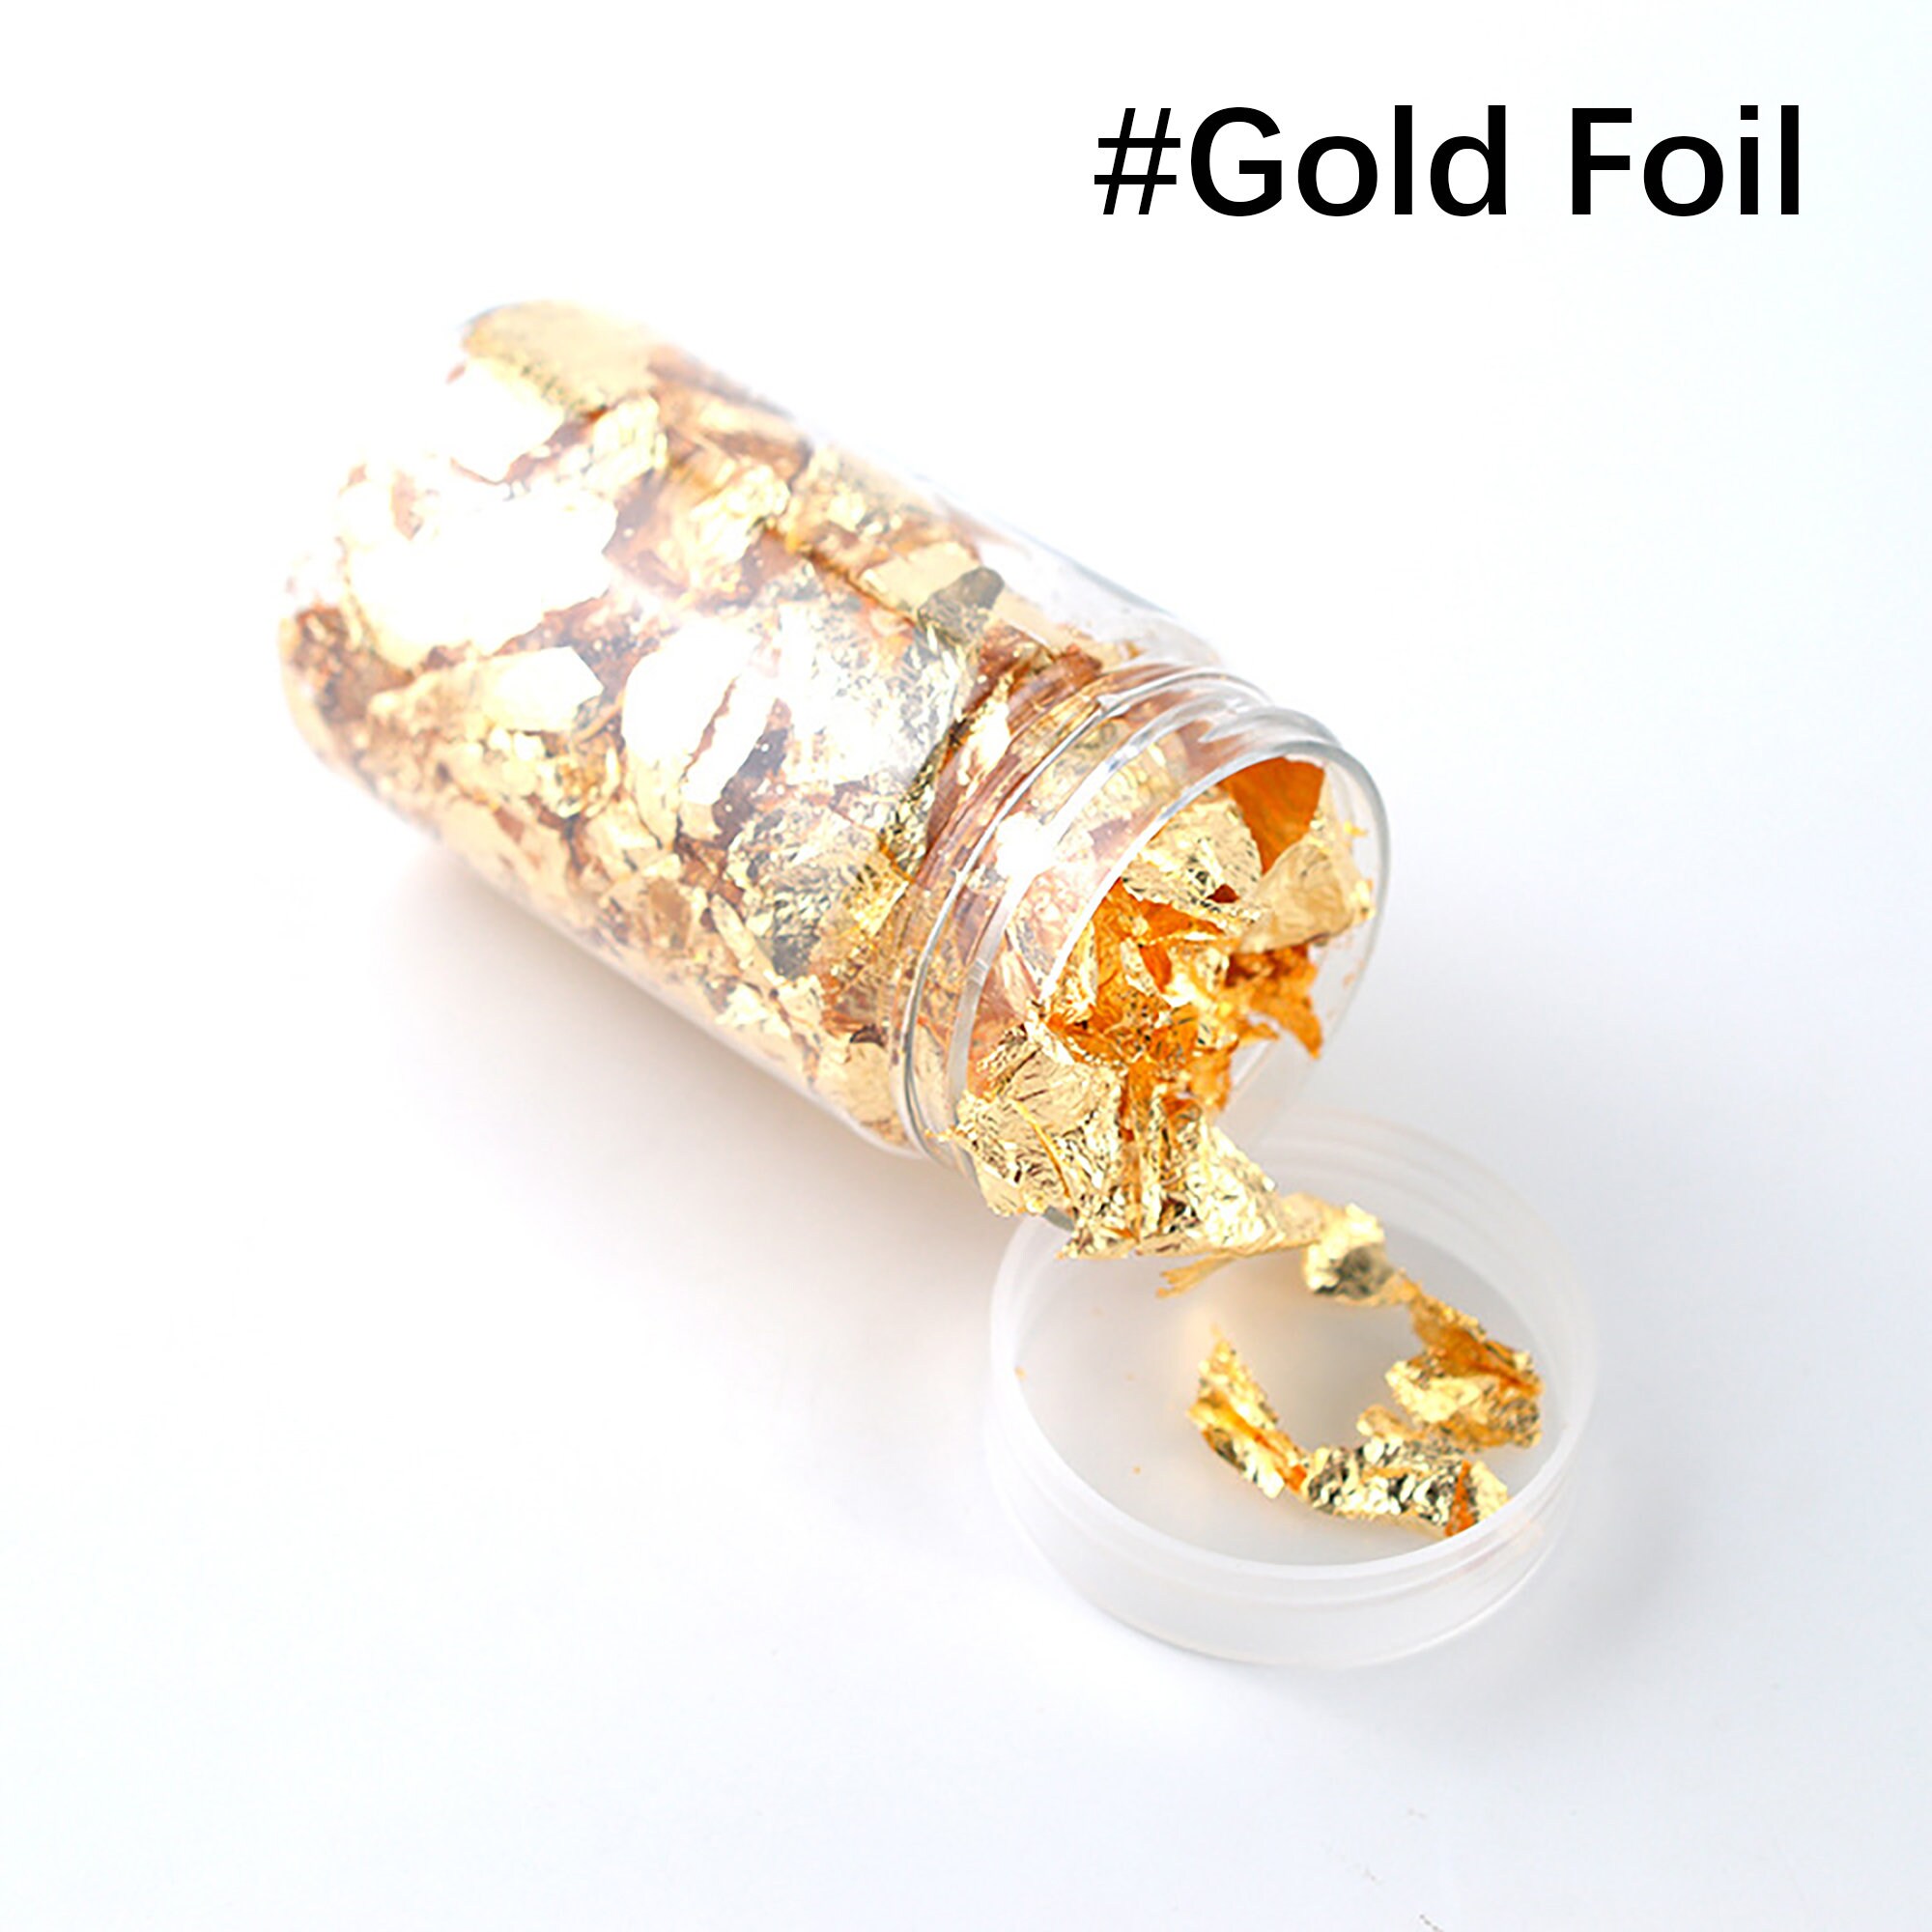 Gold Leaf Flakes, Gold Foil Flakes for Resin, Gold Silver Rose Gold Foil  Paper Flakes, Resin Decorative Fillings, Epoxy Resin Filler -  Hong Kong